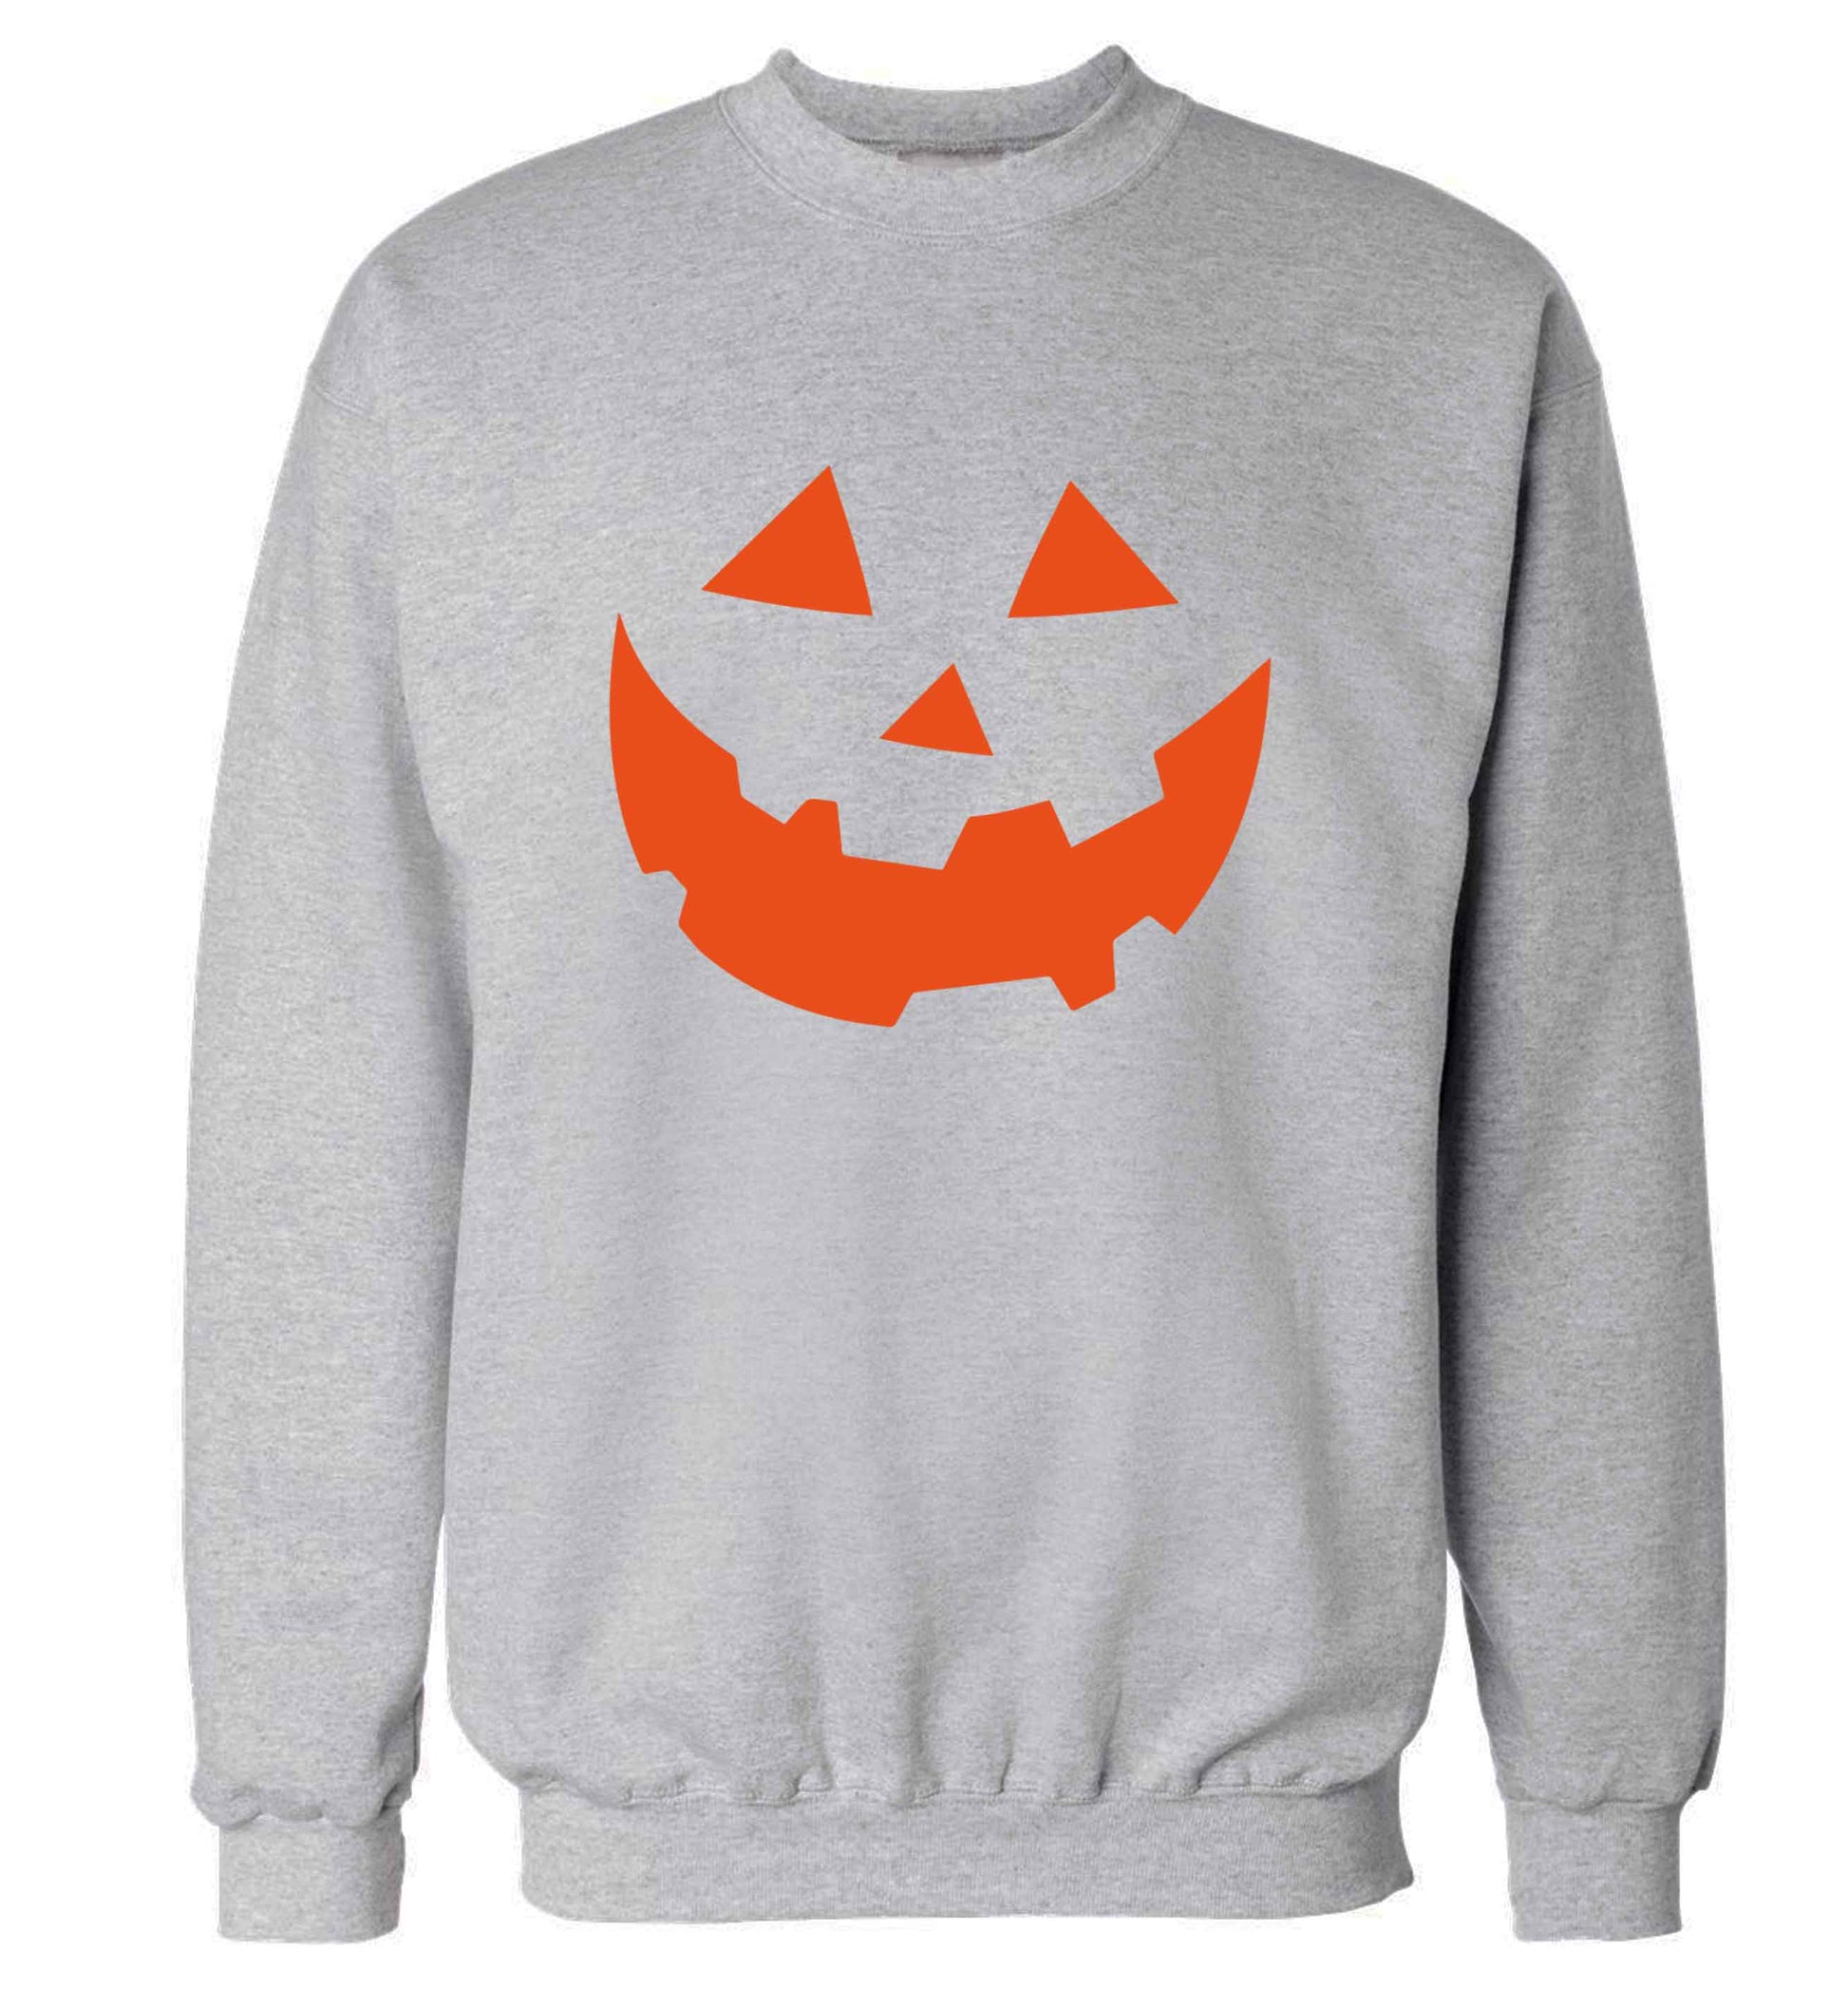 Pumpkin Spice Nice adult's unisex grey sweater 2XL